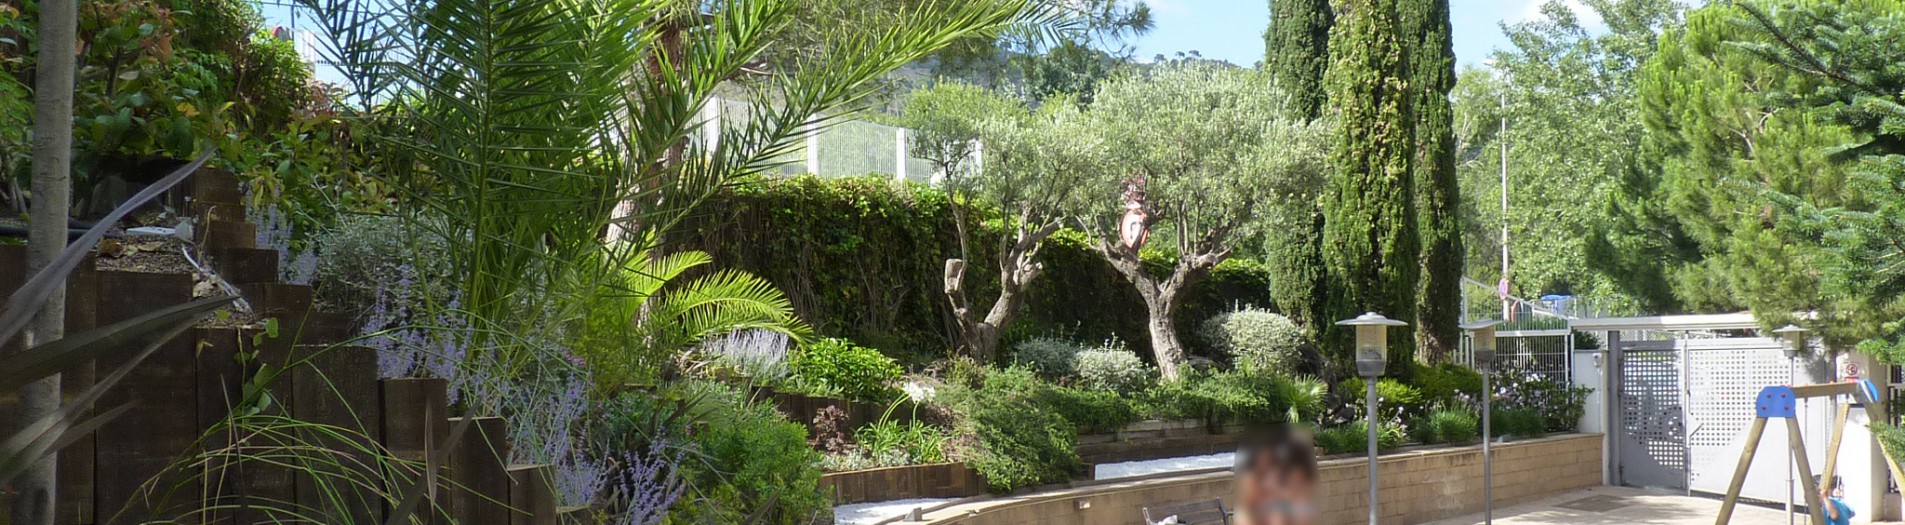 Community garden in Esplugues